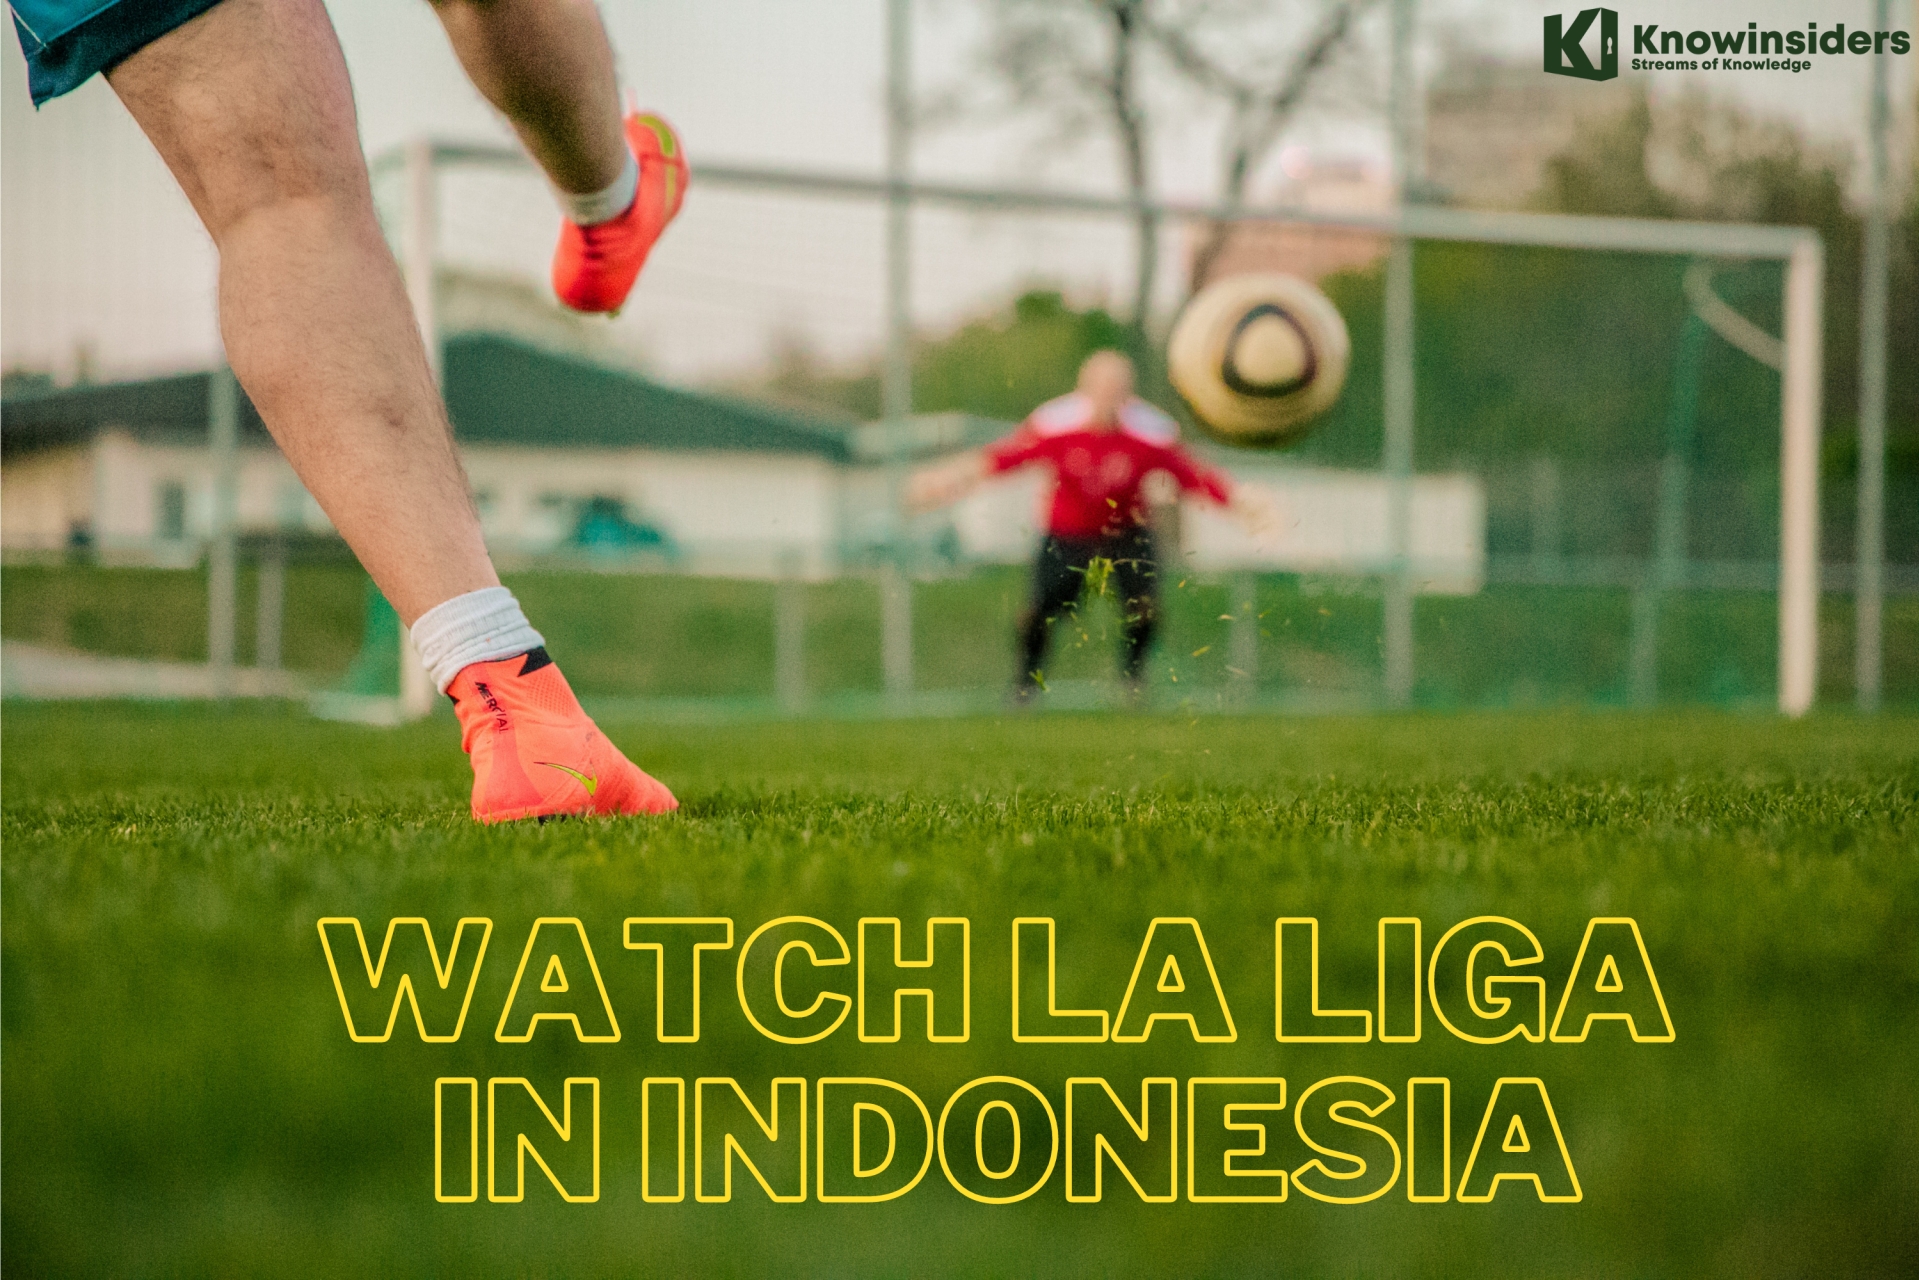 Watch La Liga In Indonesia: 10 Free Sites, TV Channel, Live Stream